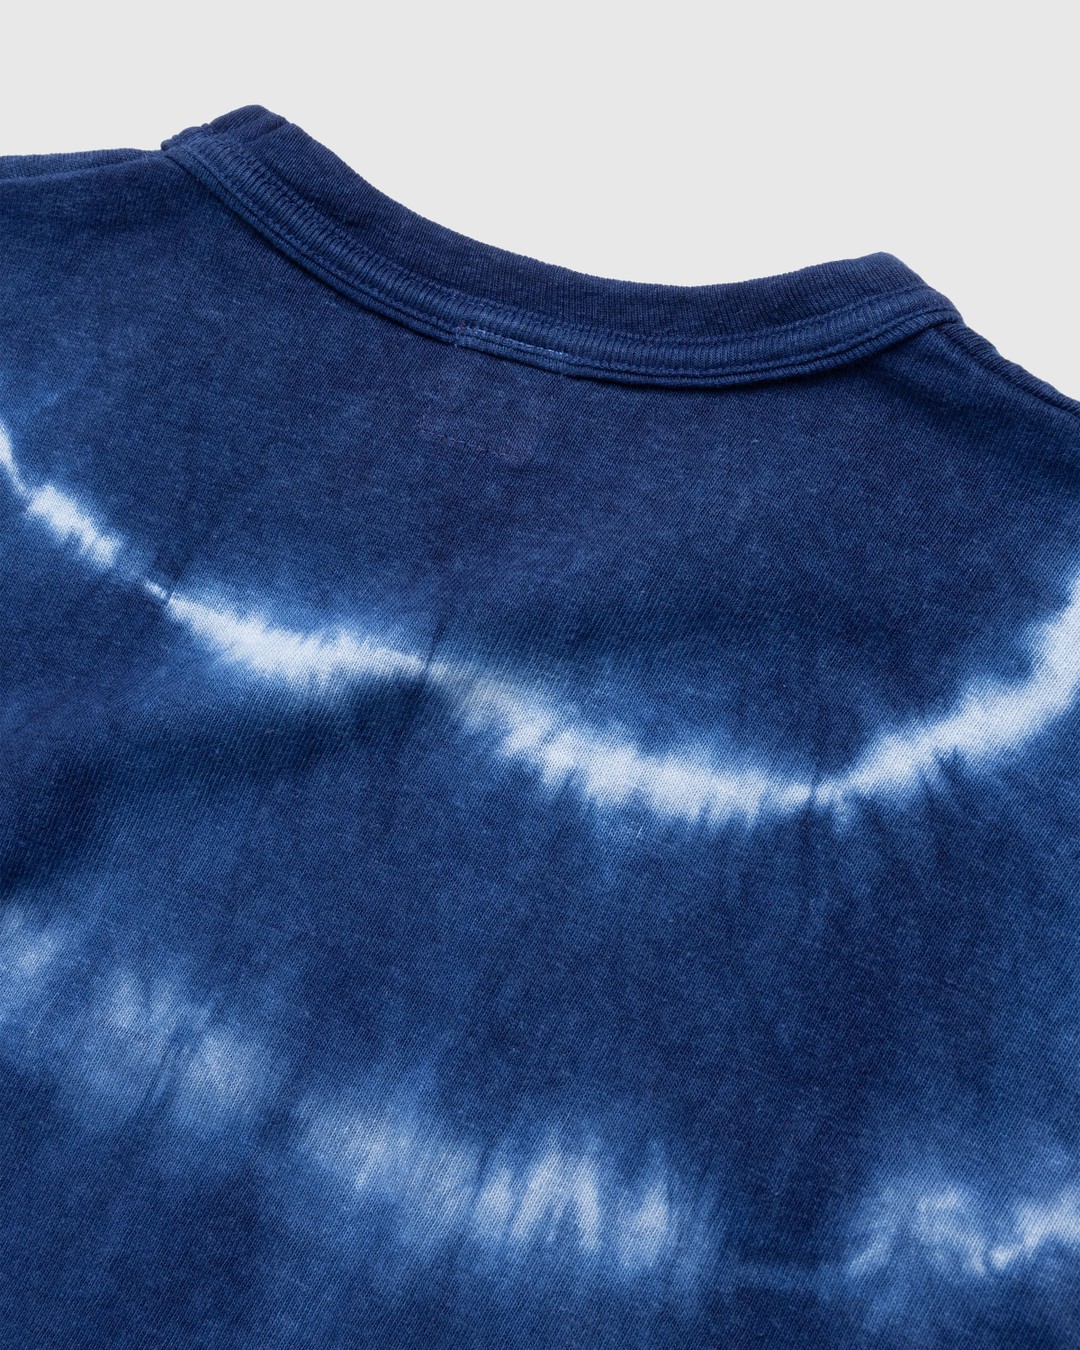 Human Made – Ningen-sei Indigo Dyed T-Shirt #1 Blue | Highsnobiety